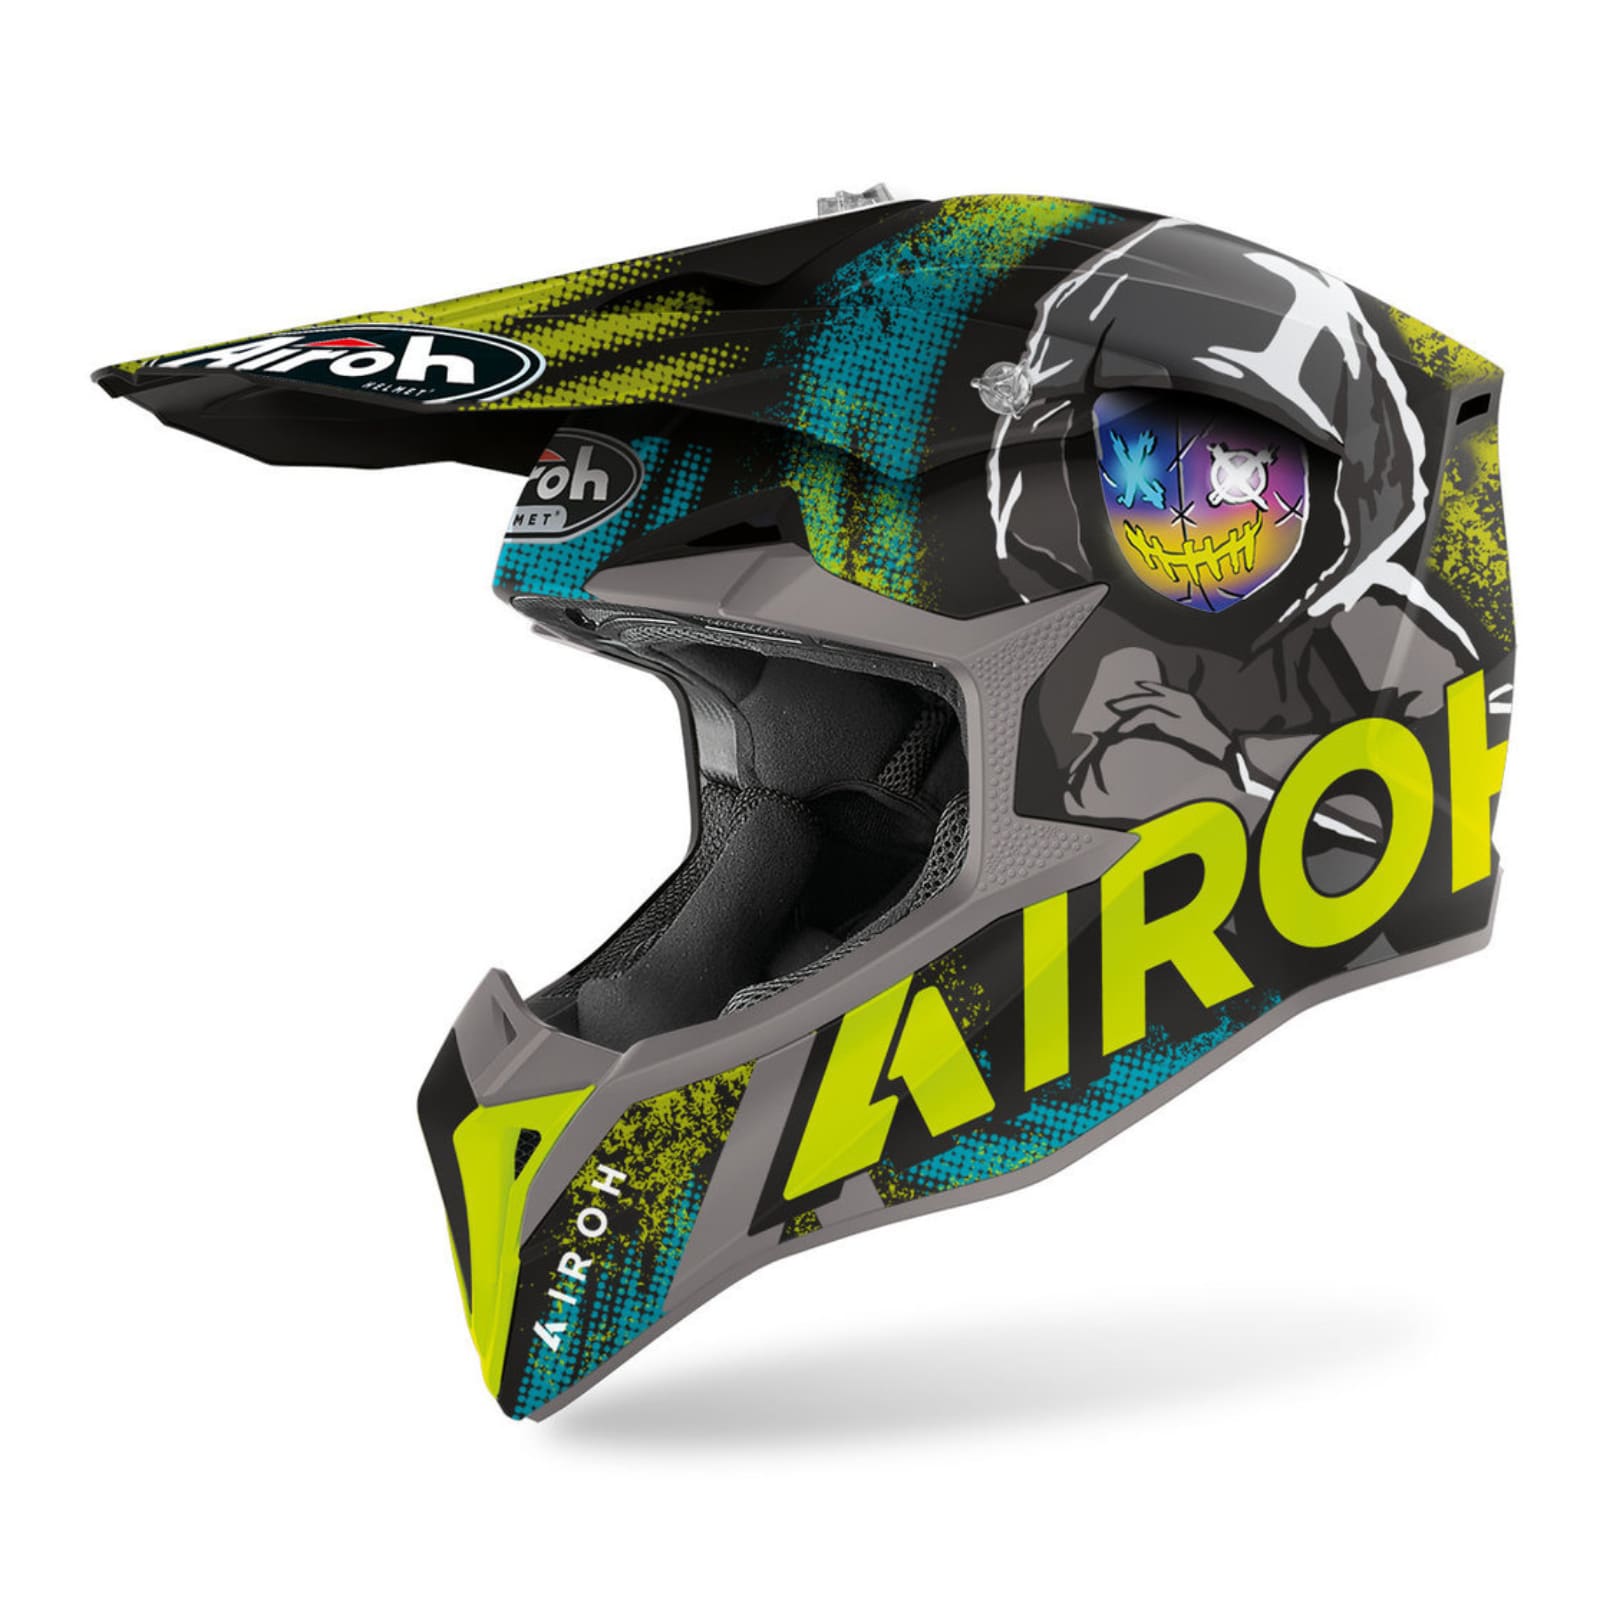 Airoh wraap オフロード ヘルメット アイロー - オートバイアクセサリー